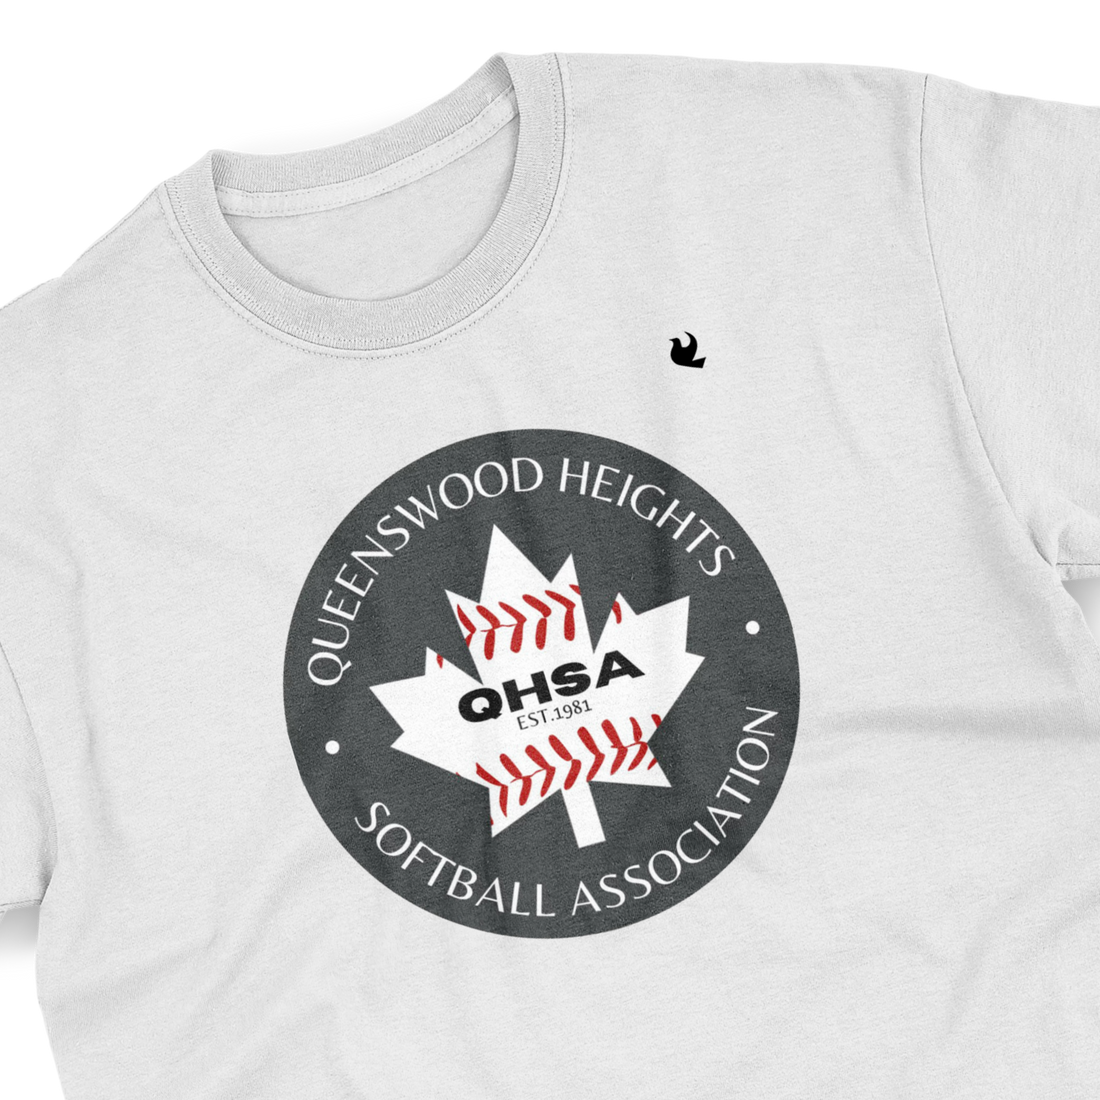 QHSA Softball Classic T-Shirt